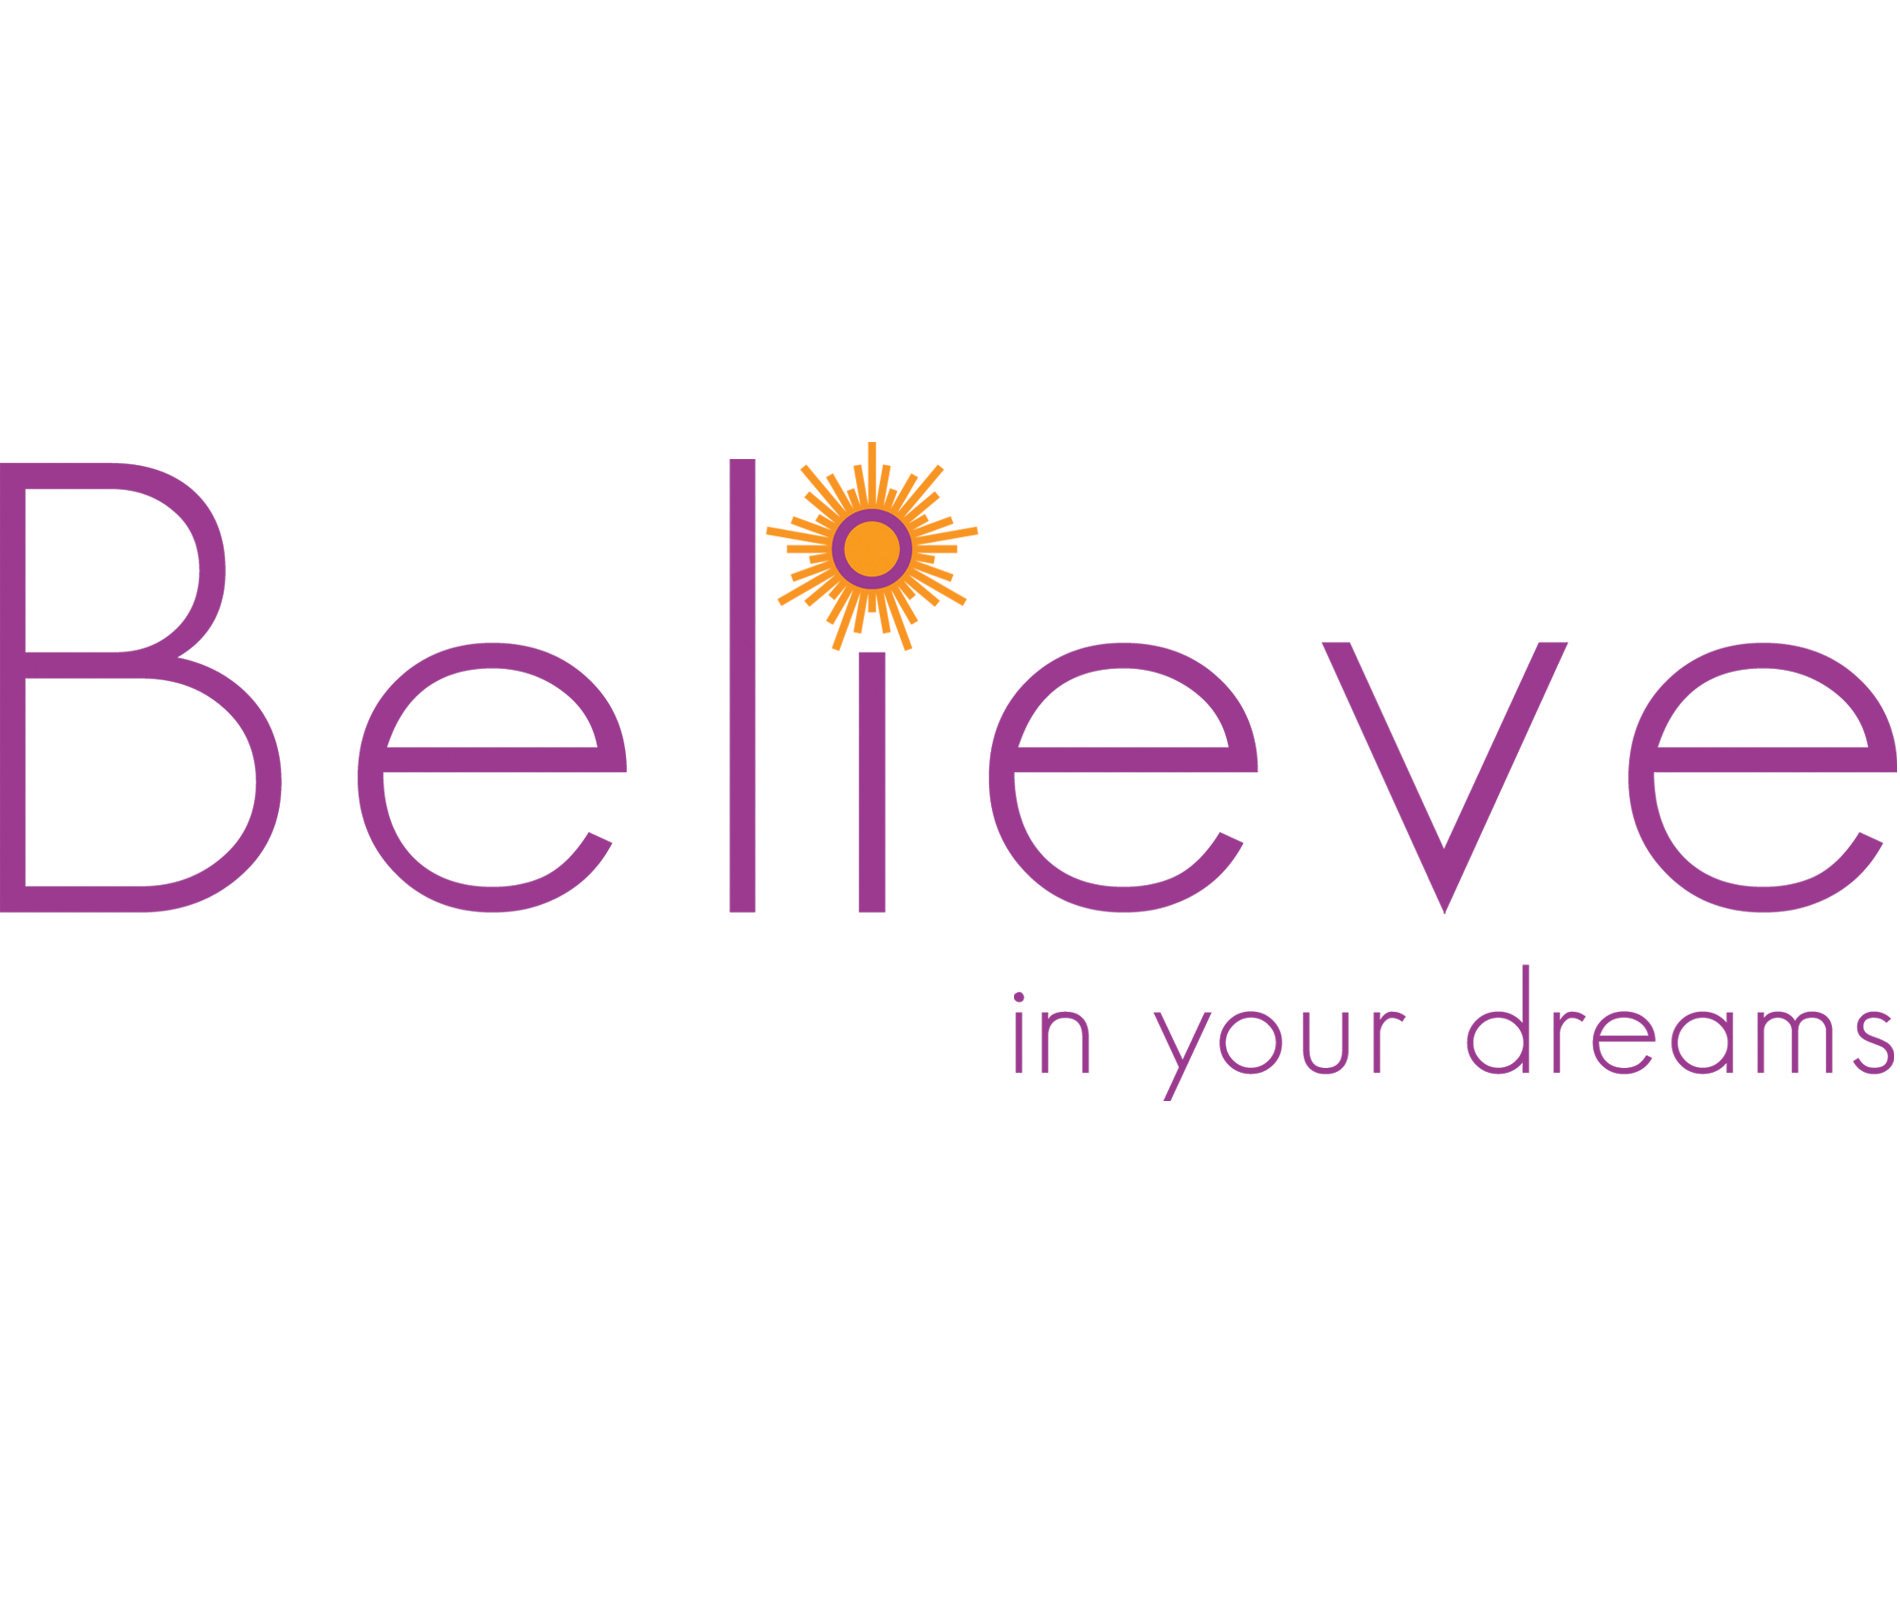 Belive Logo - Believe In Your Dreams. Believe in your dreams